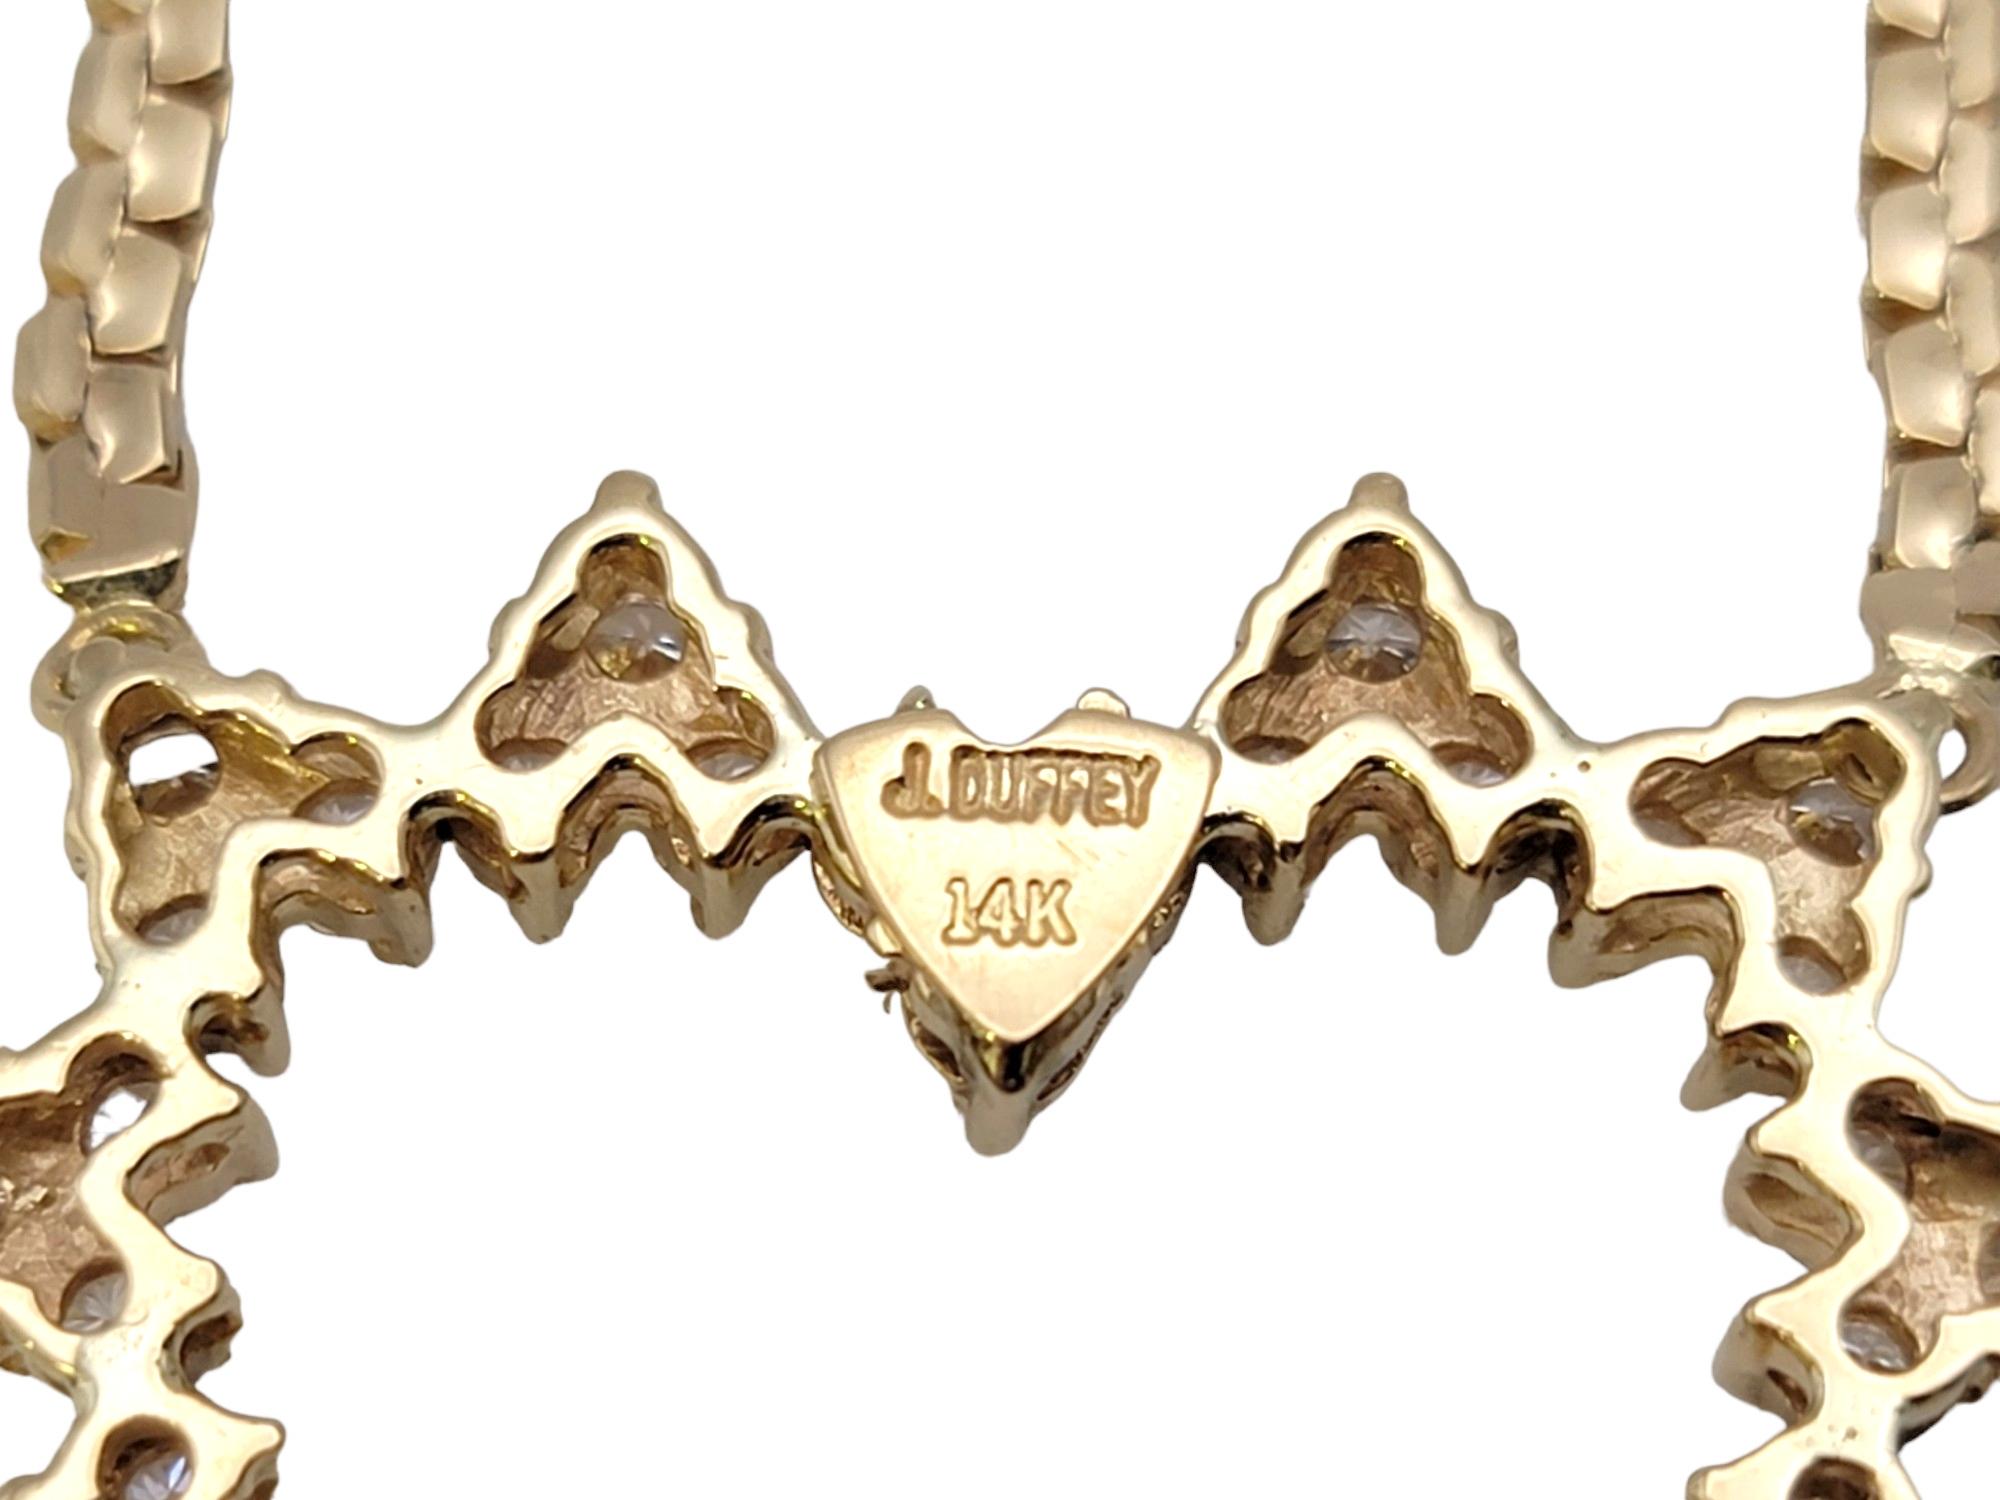 J. Duffey Diamond Open Heart Pendant Necklace in 14 Karat Yellow Gold For Sale 6